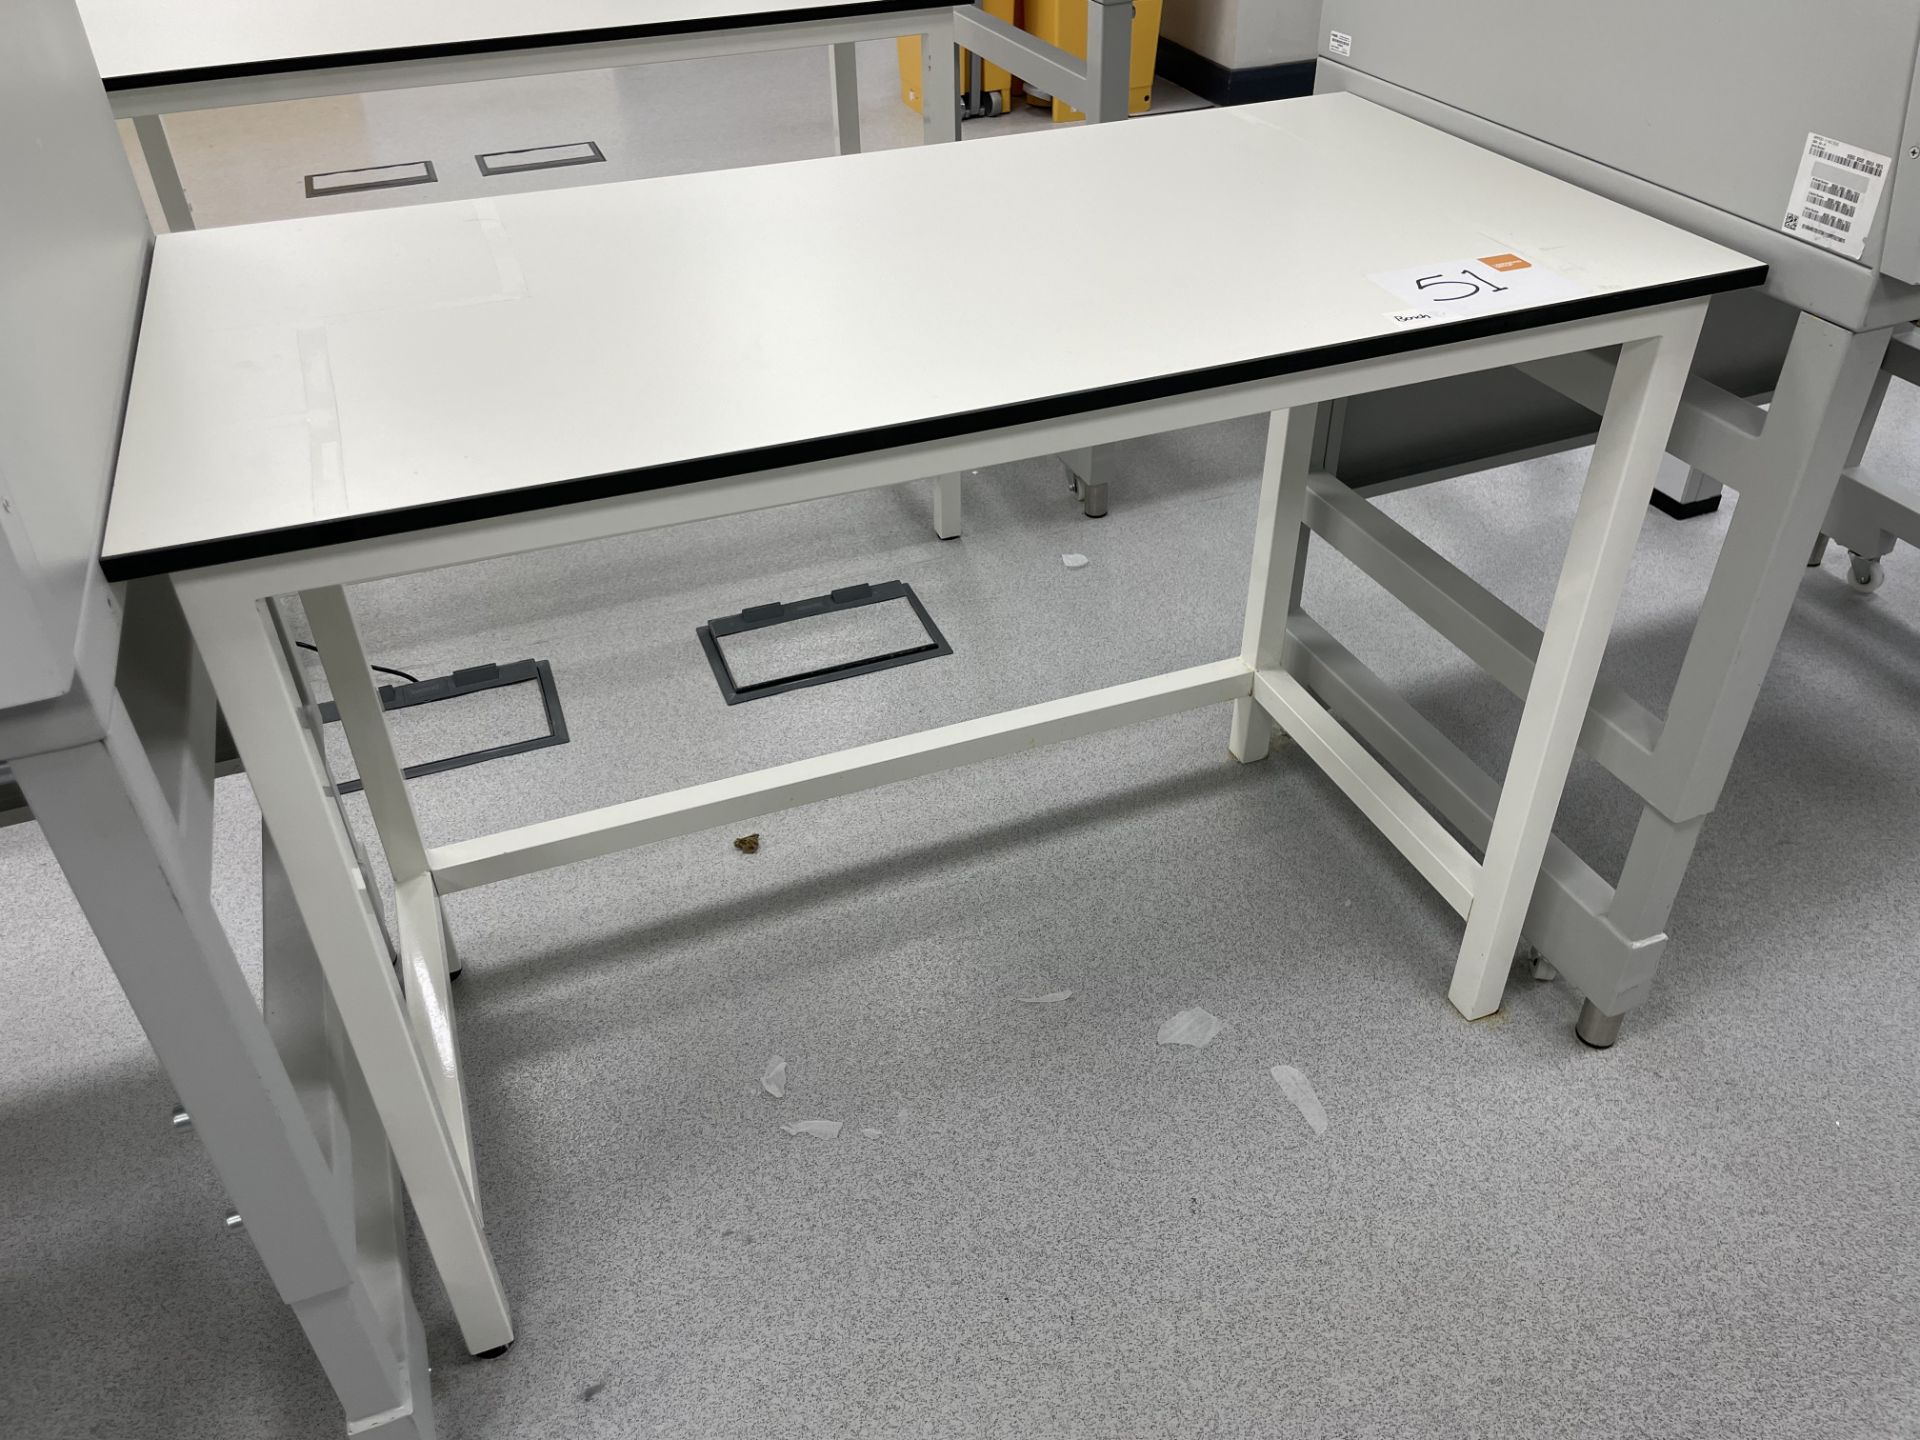 A Laboratory bench, 120cm x 60cm x 89cm h.